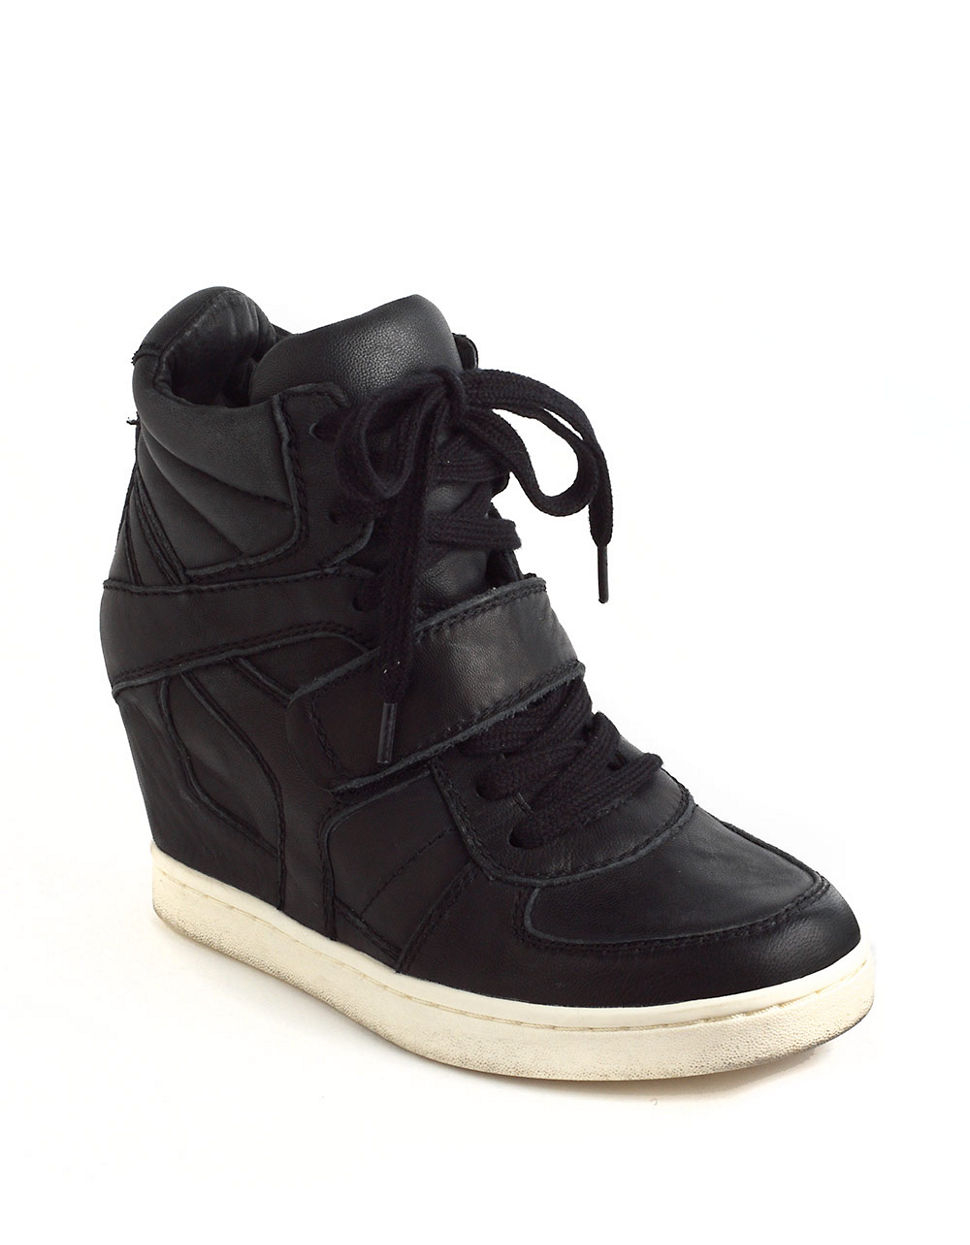 Ash Cool Ter Leather Wedge Hightop Sneakers in Black | Lyst